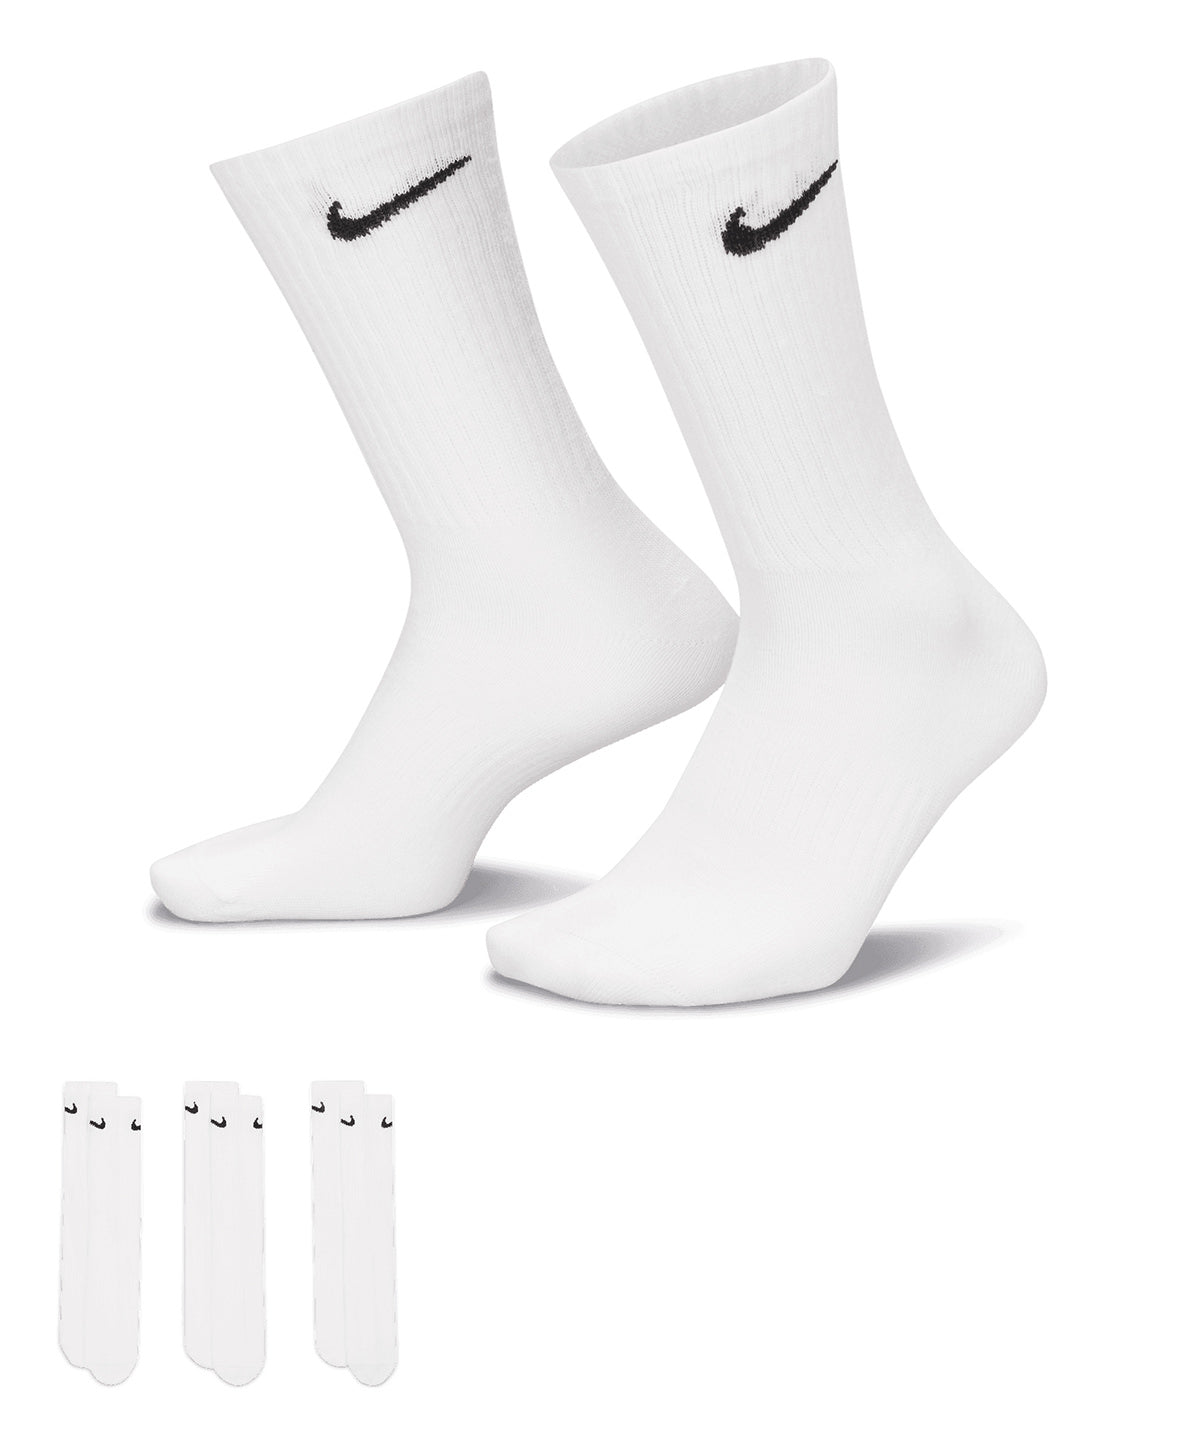 Nike Everyday Cushion Crew socks (3 Pack)